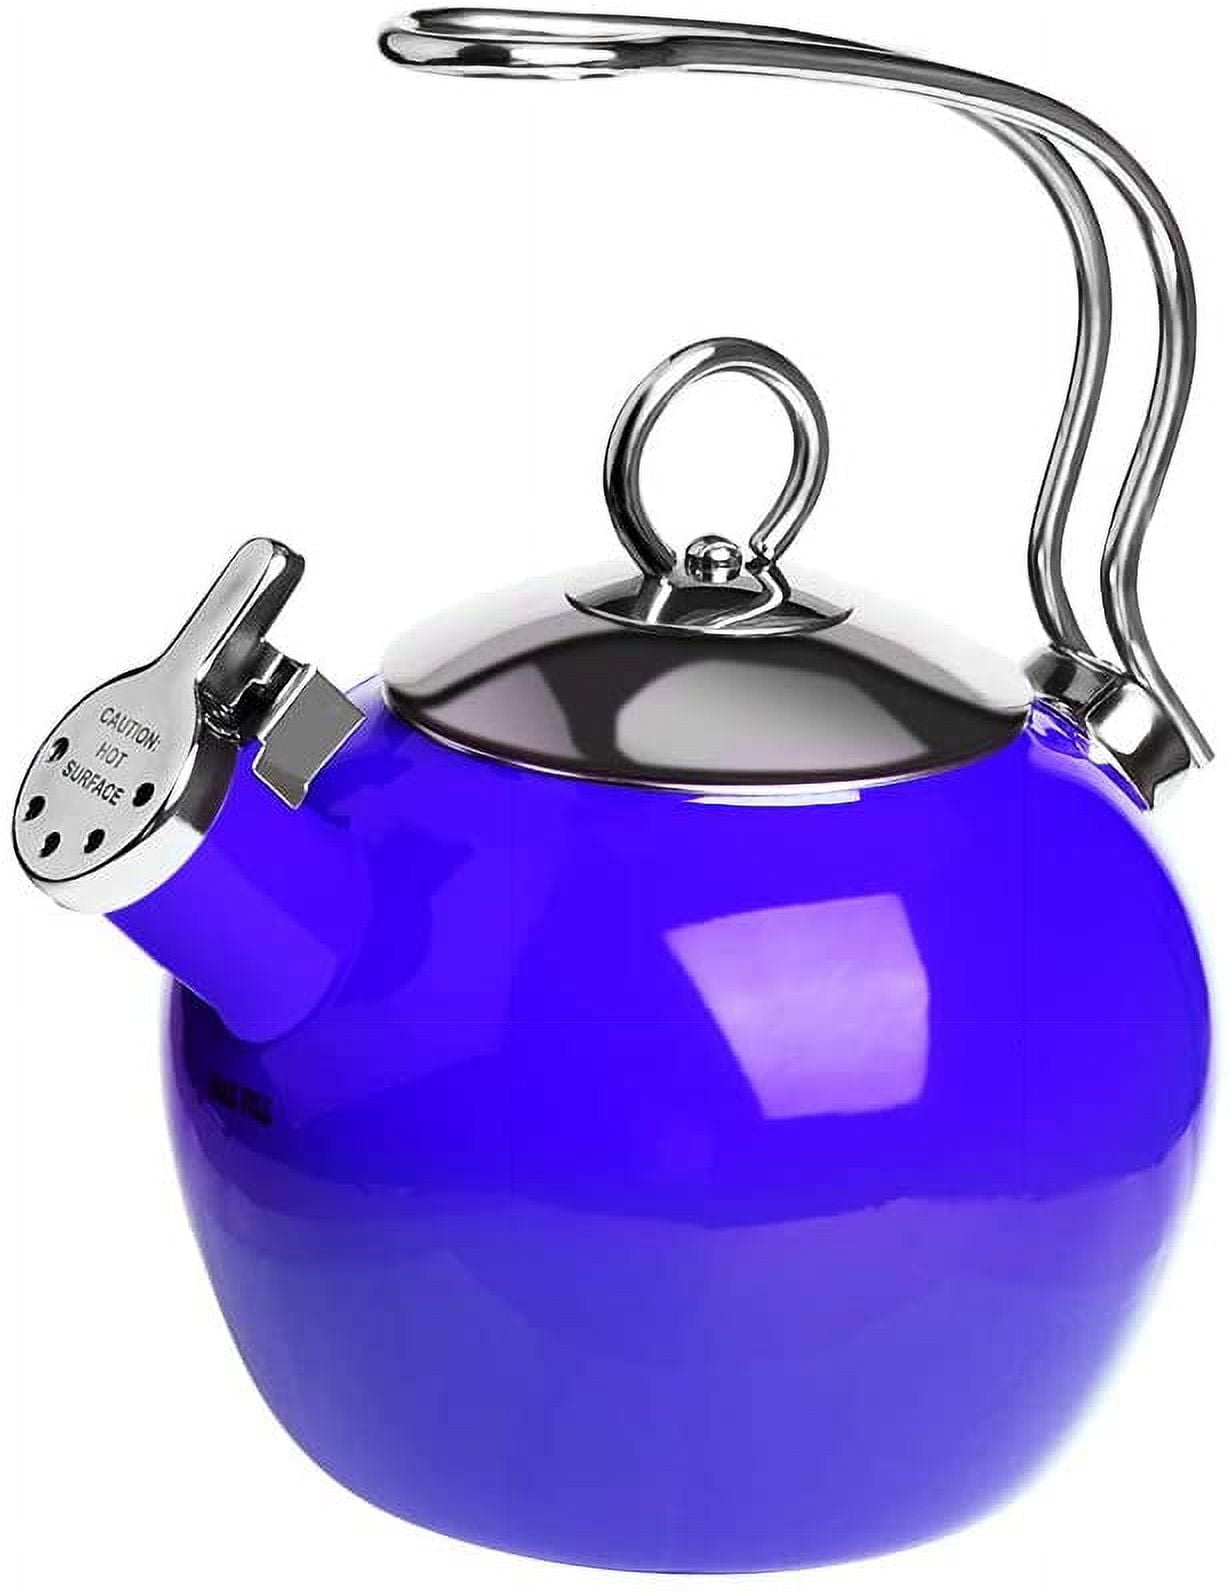 Caraway Tea Kettle Blue - ShopStyle